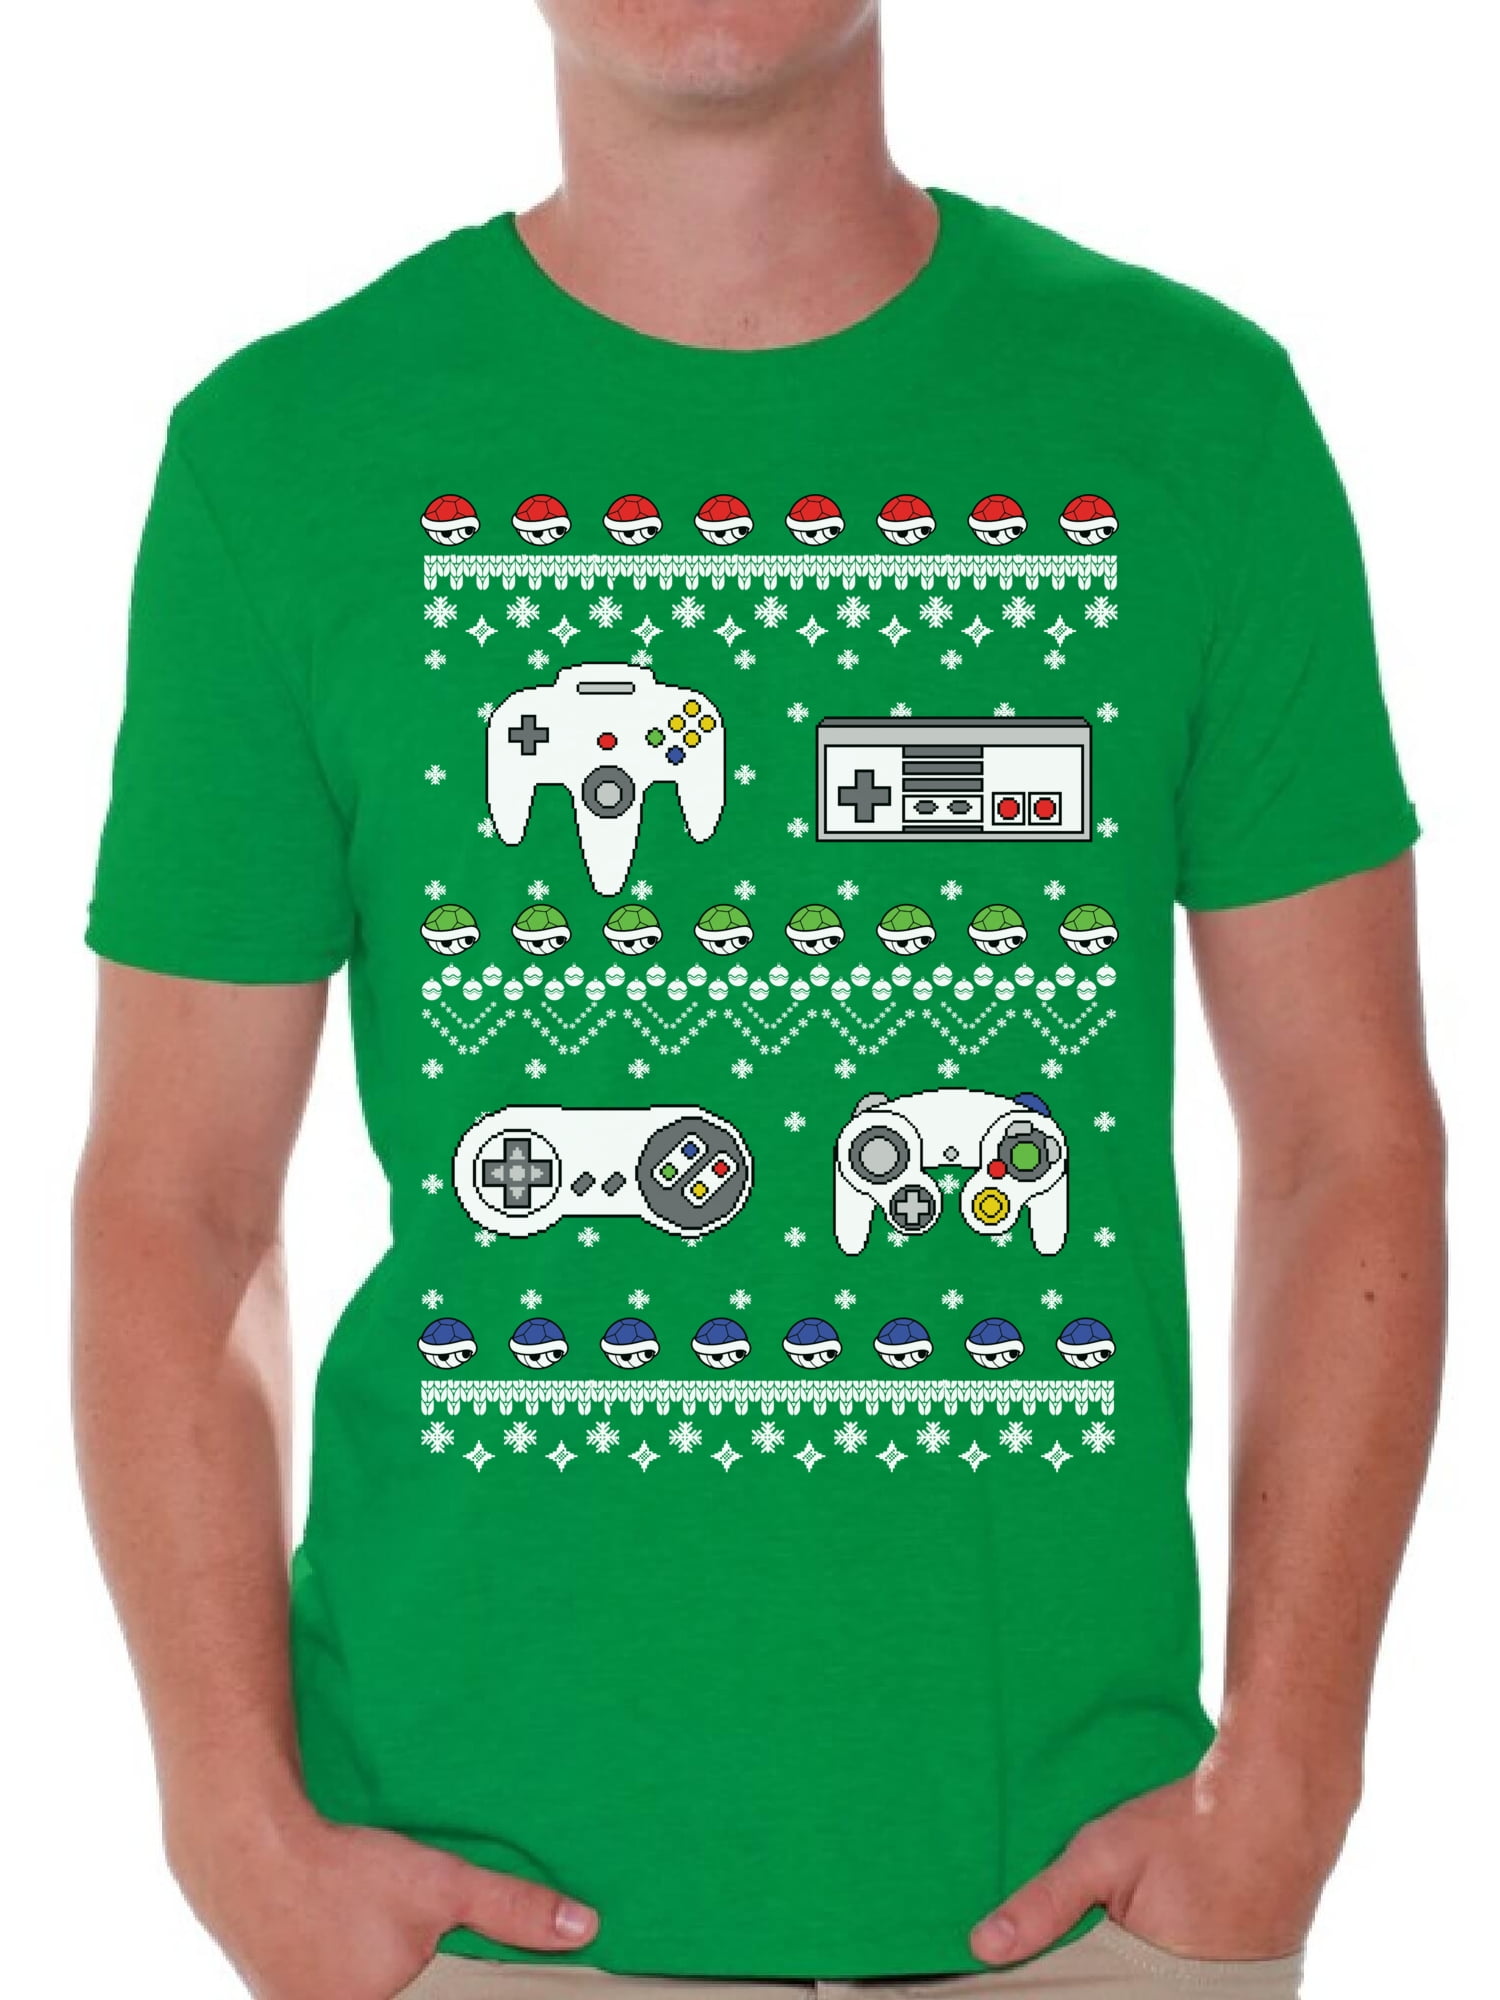 Morgz Youtuber Gaming Gamer T Shirt Mens Youth Inspired Gift Xmas Tee Top Tshirt